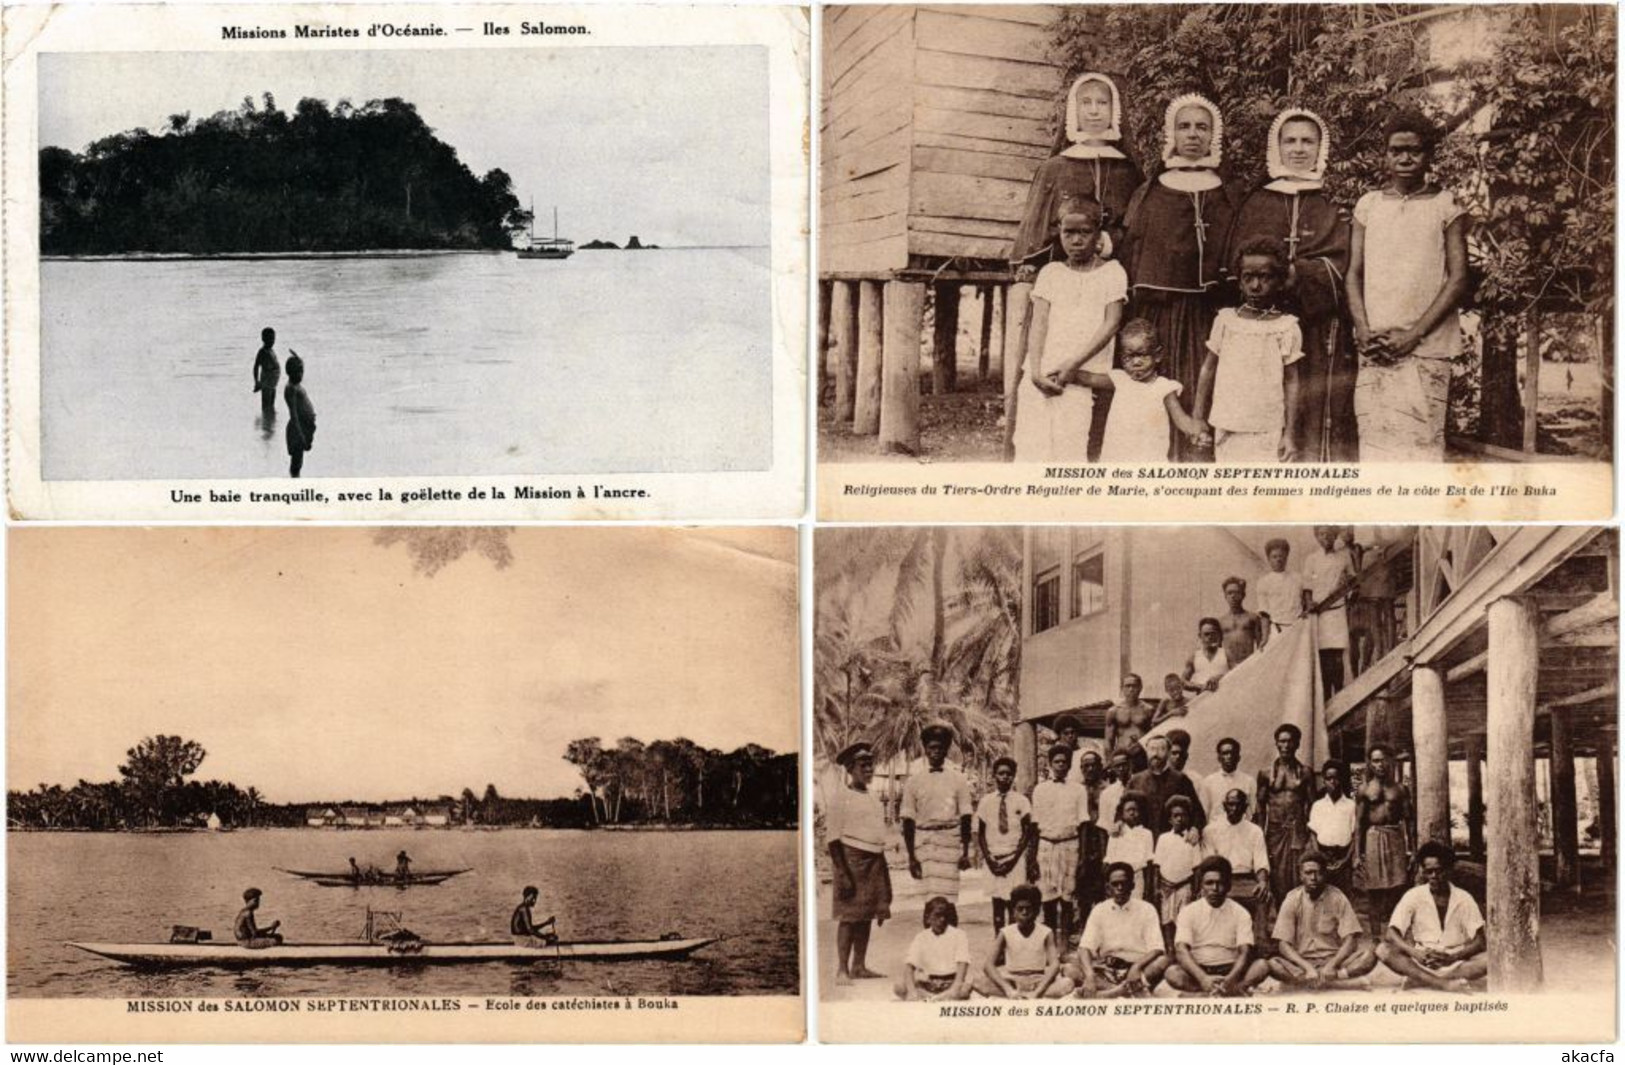 SALOMON ISLANDS OCEANIA SOUTH PACIFIC 13 Vintage Postcards (L5967) - Salomoninseln